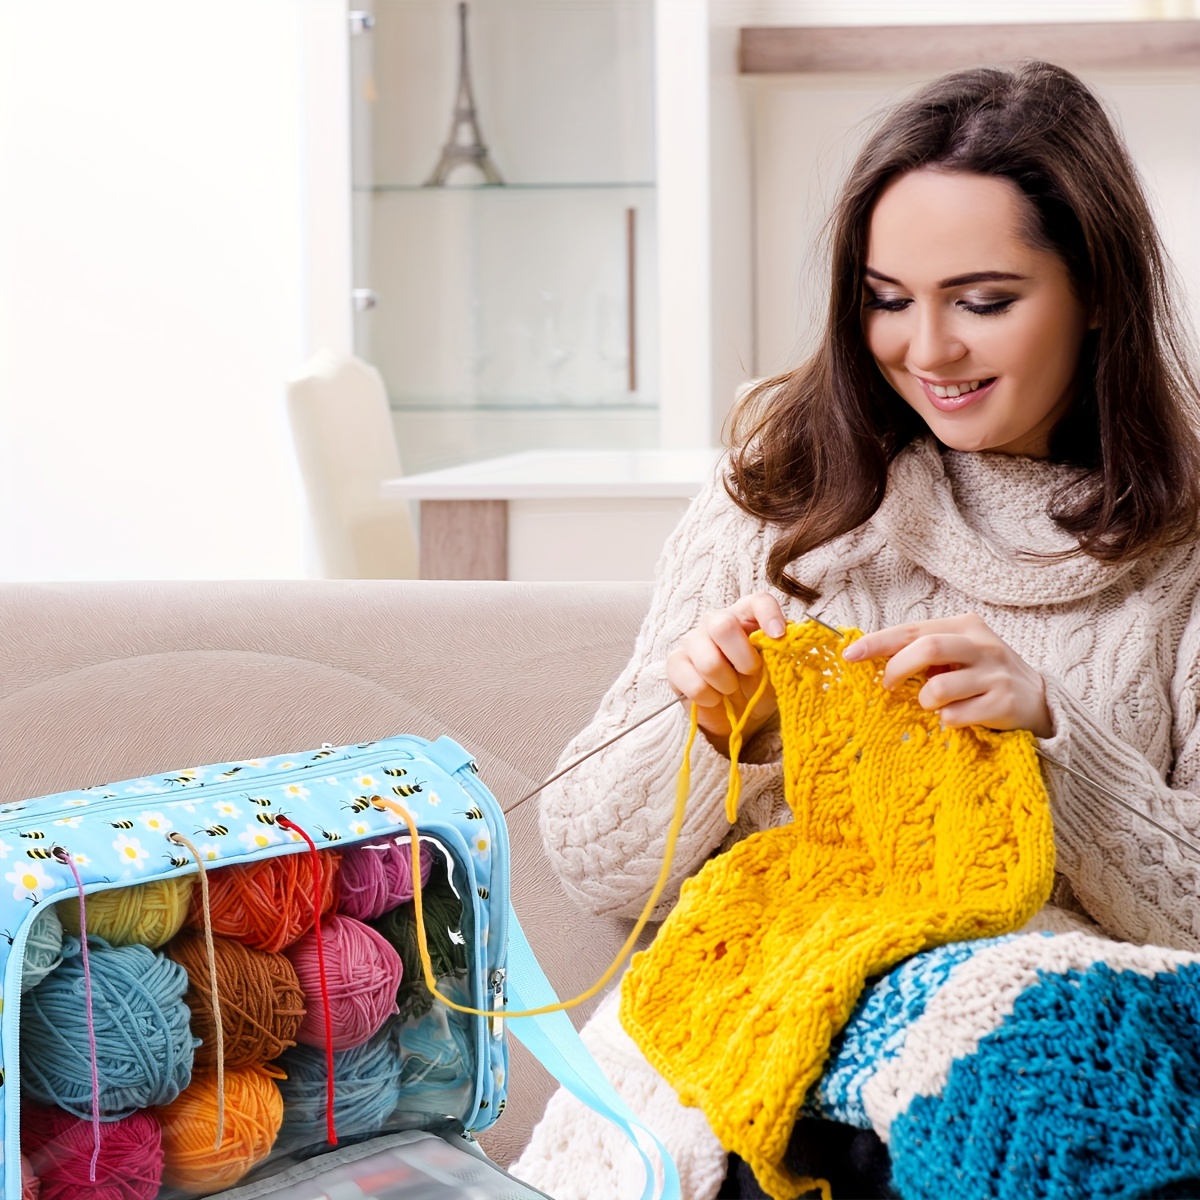 Yarn, Needlework, Crochet, & Knitting